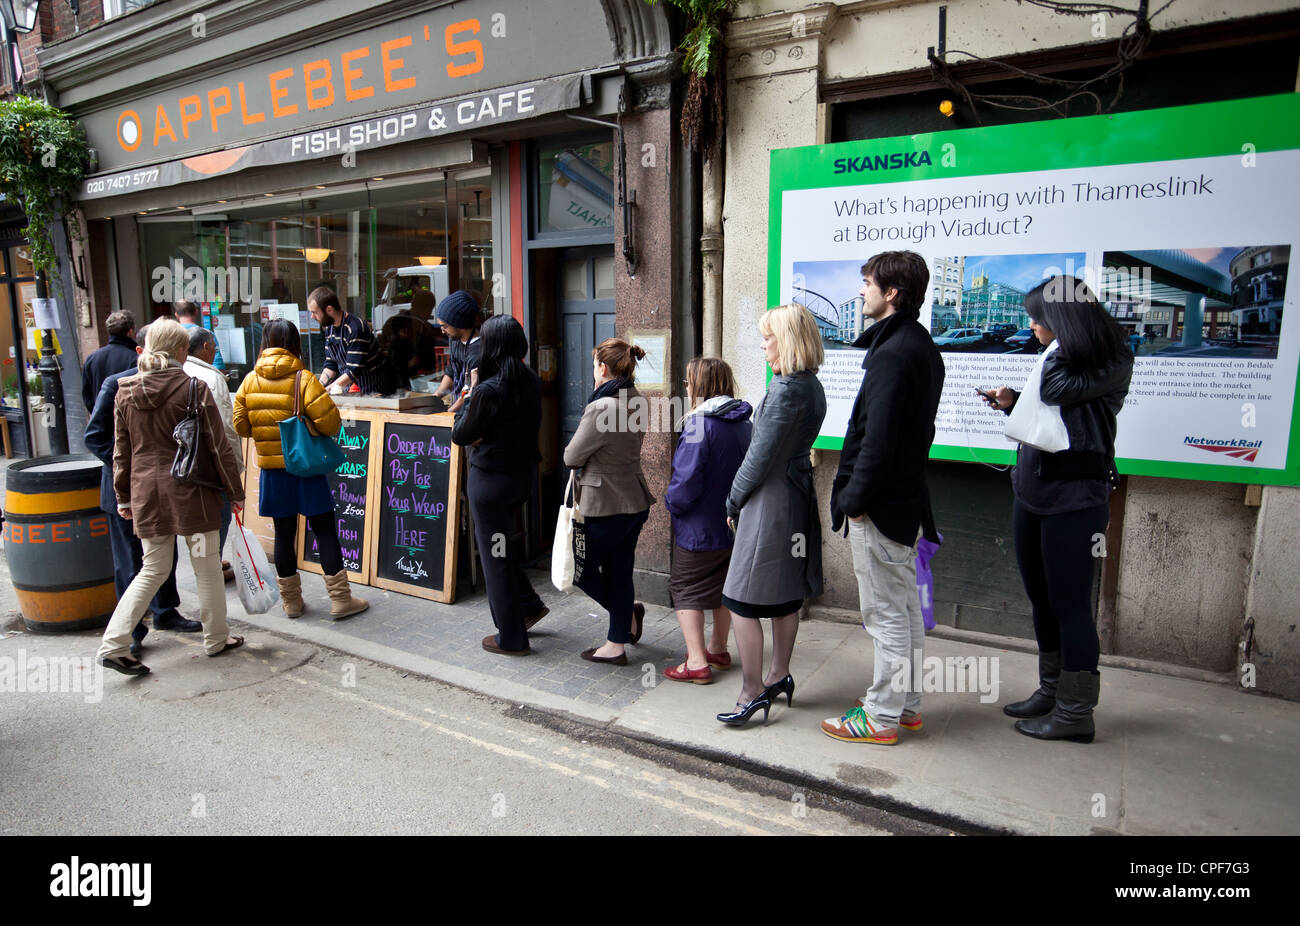 Queue of people outside Applebee's fish shop & cafe, Stoney Street, London, SE1, England, UK Stock Photo